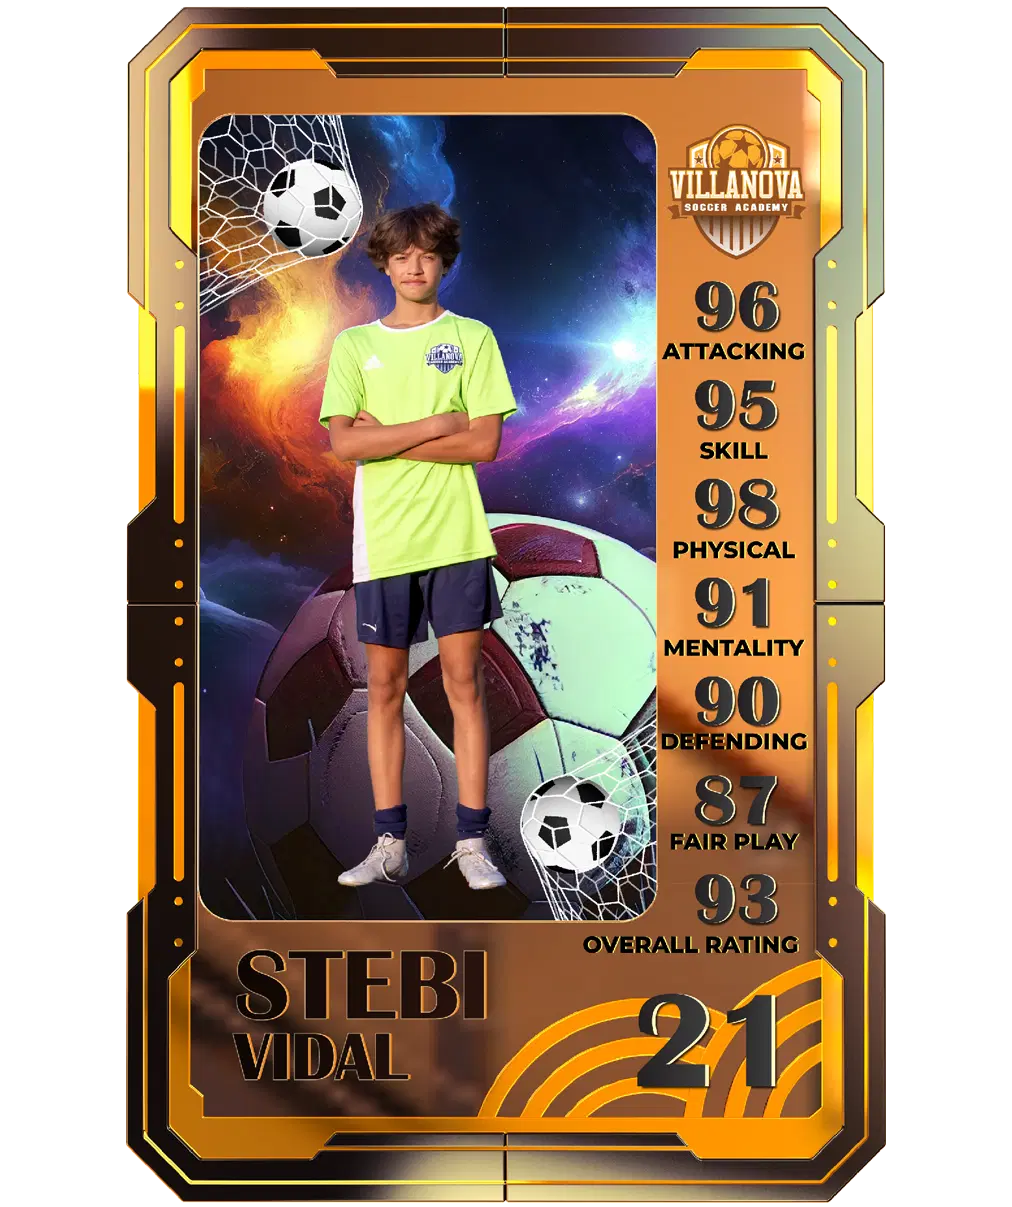 Player card of Stebi Vidal from Villanova Soccer Academy